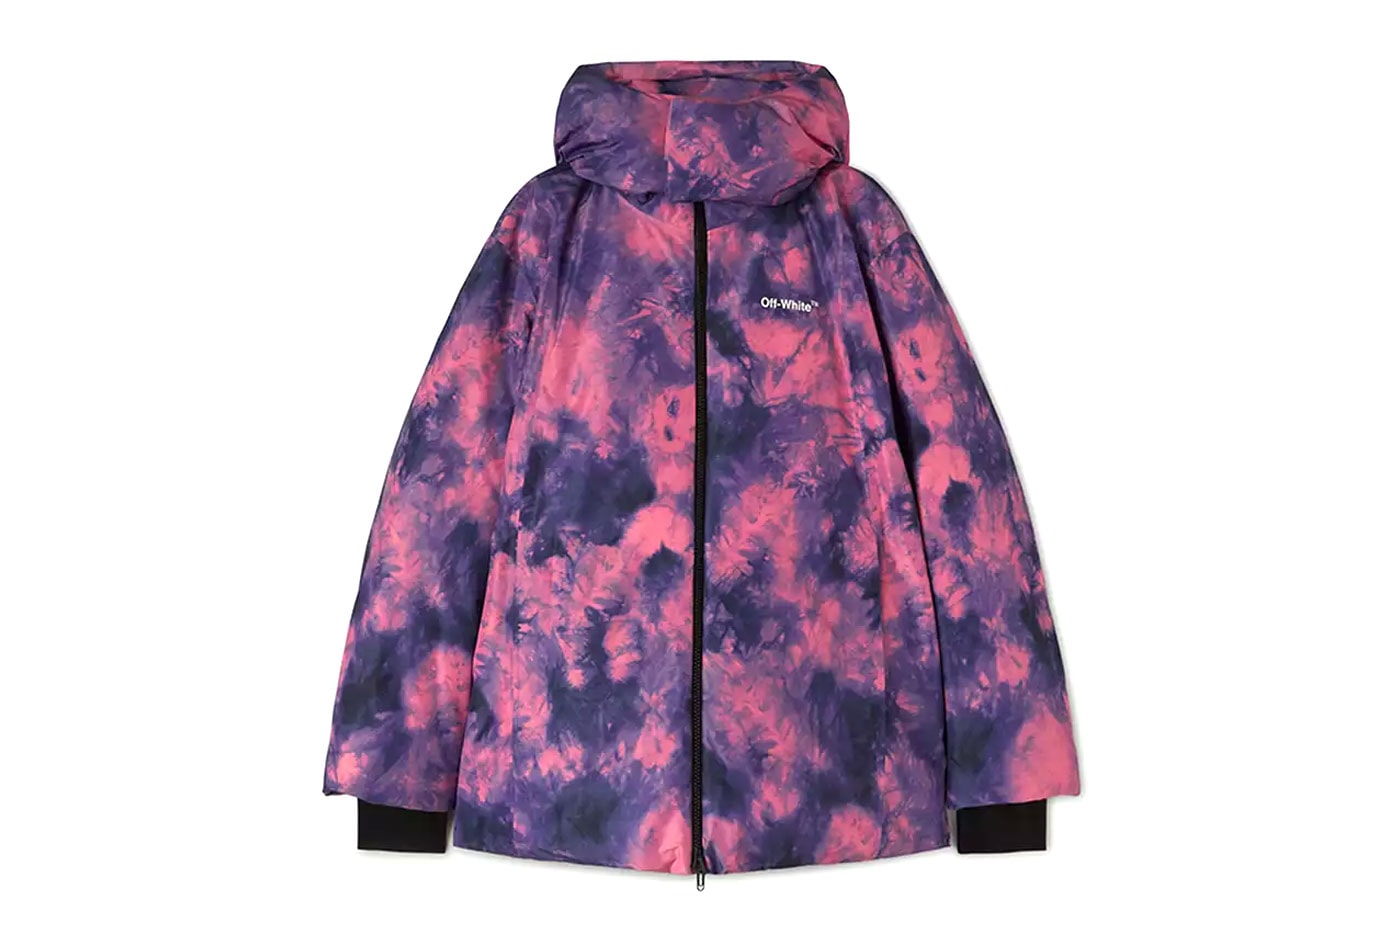 Off-white skiwear jacket collection lookbook tie dye purple green orange gradient pant glove goggle sunglasses release info date price